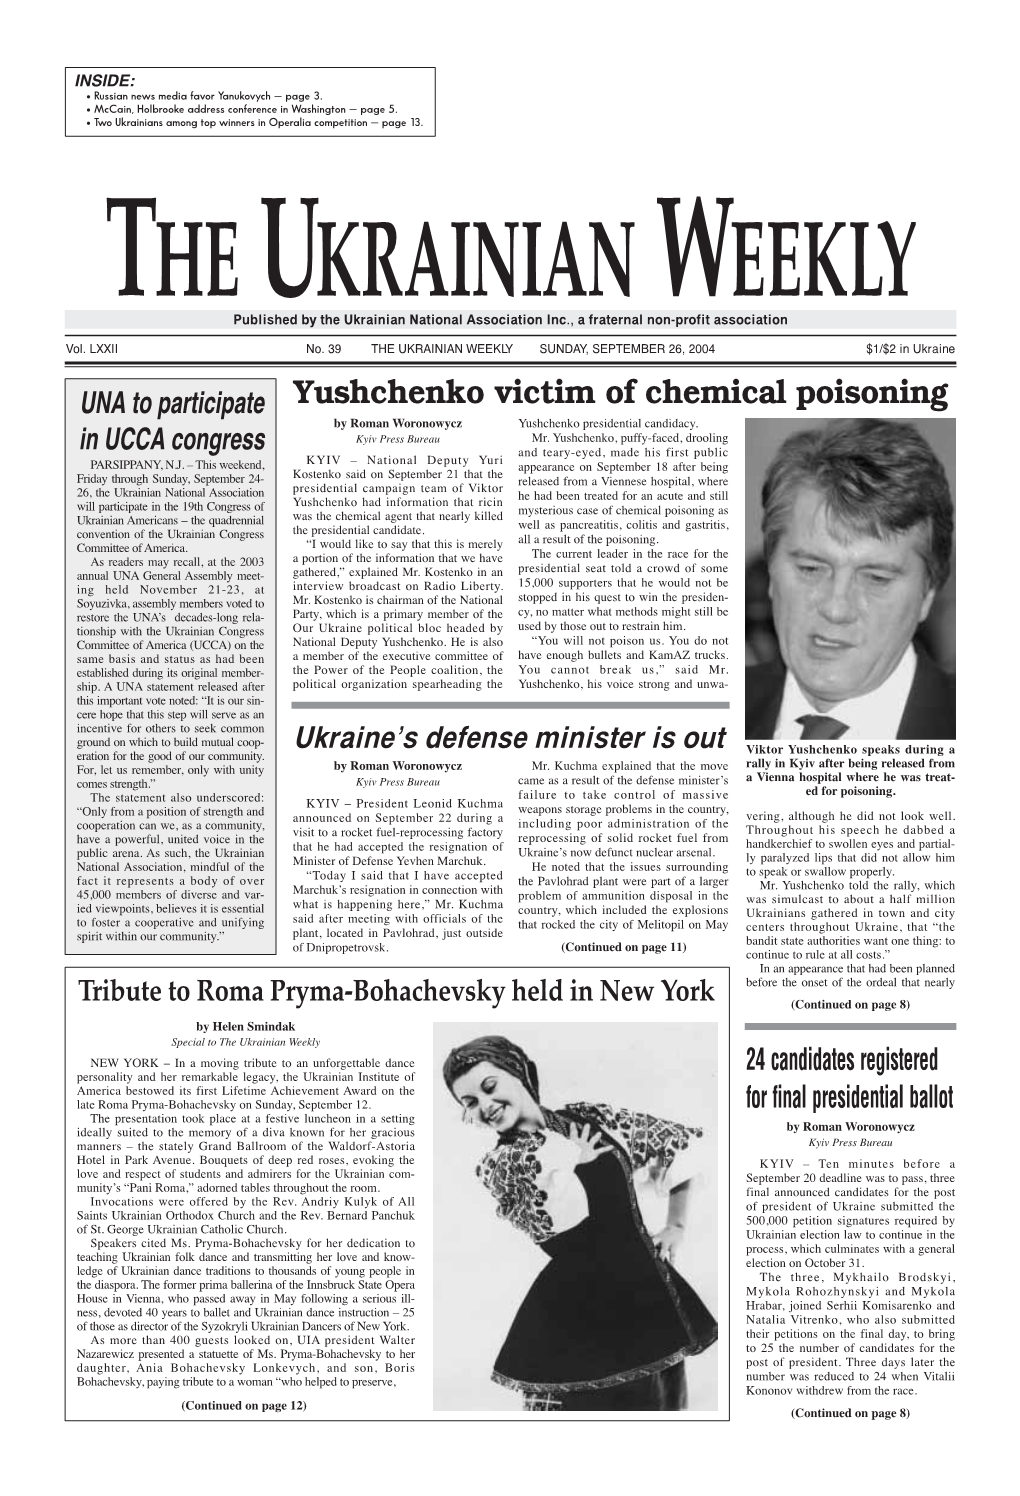 The Ukrainian Weekly 2004, No.39